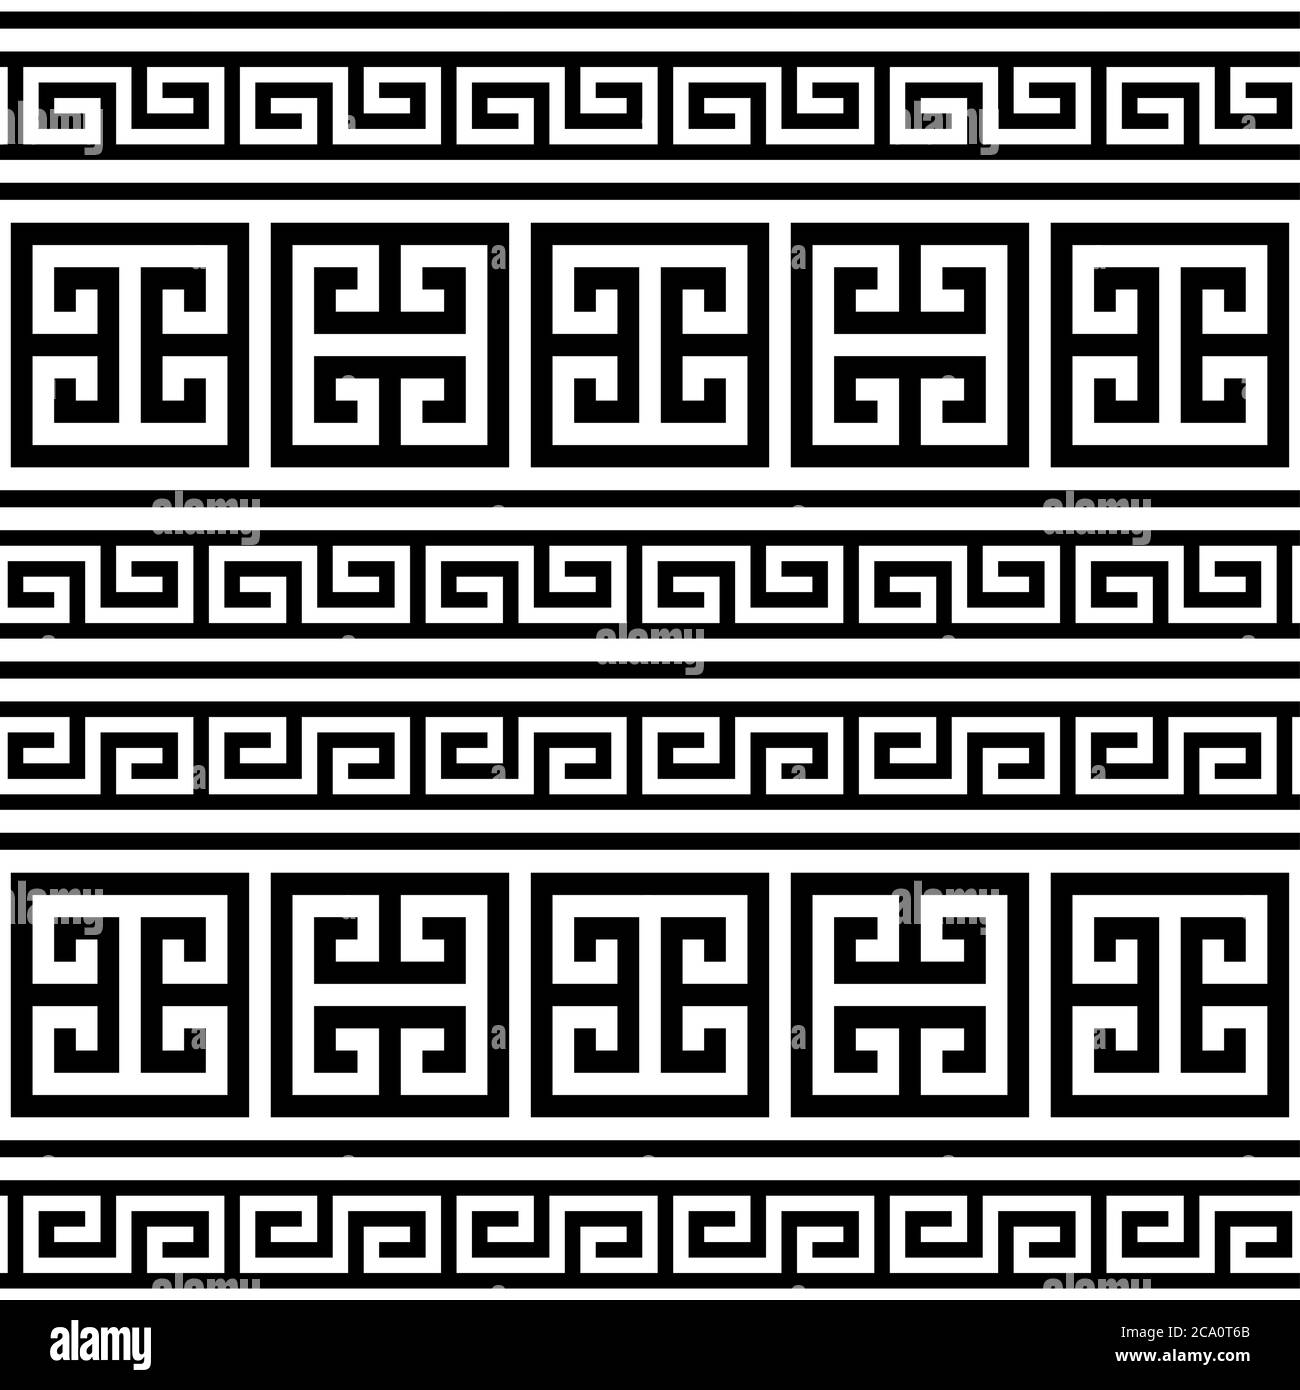 Retro Greek key pattern seamless vector design - inspired by ancient Greece vase art Stock Vector